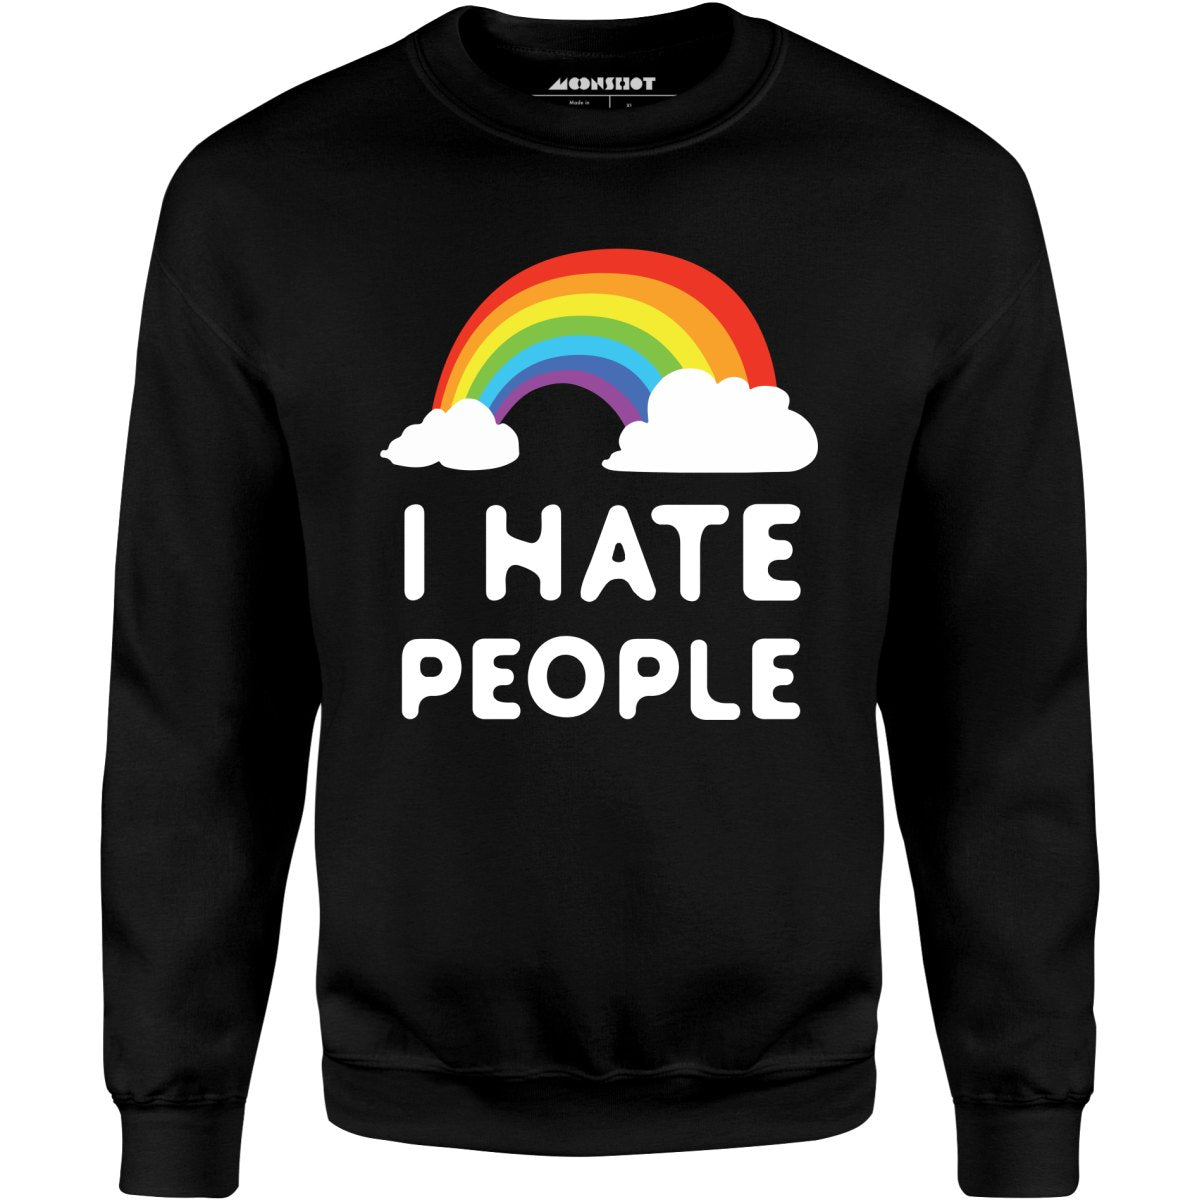 I Hate People - Unisex Sweatshirt